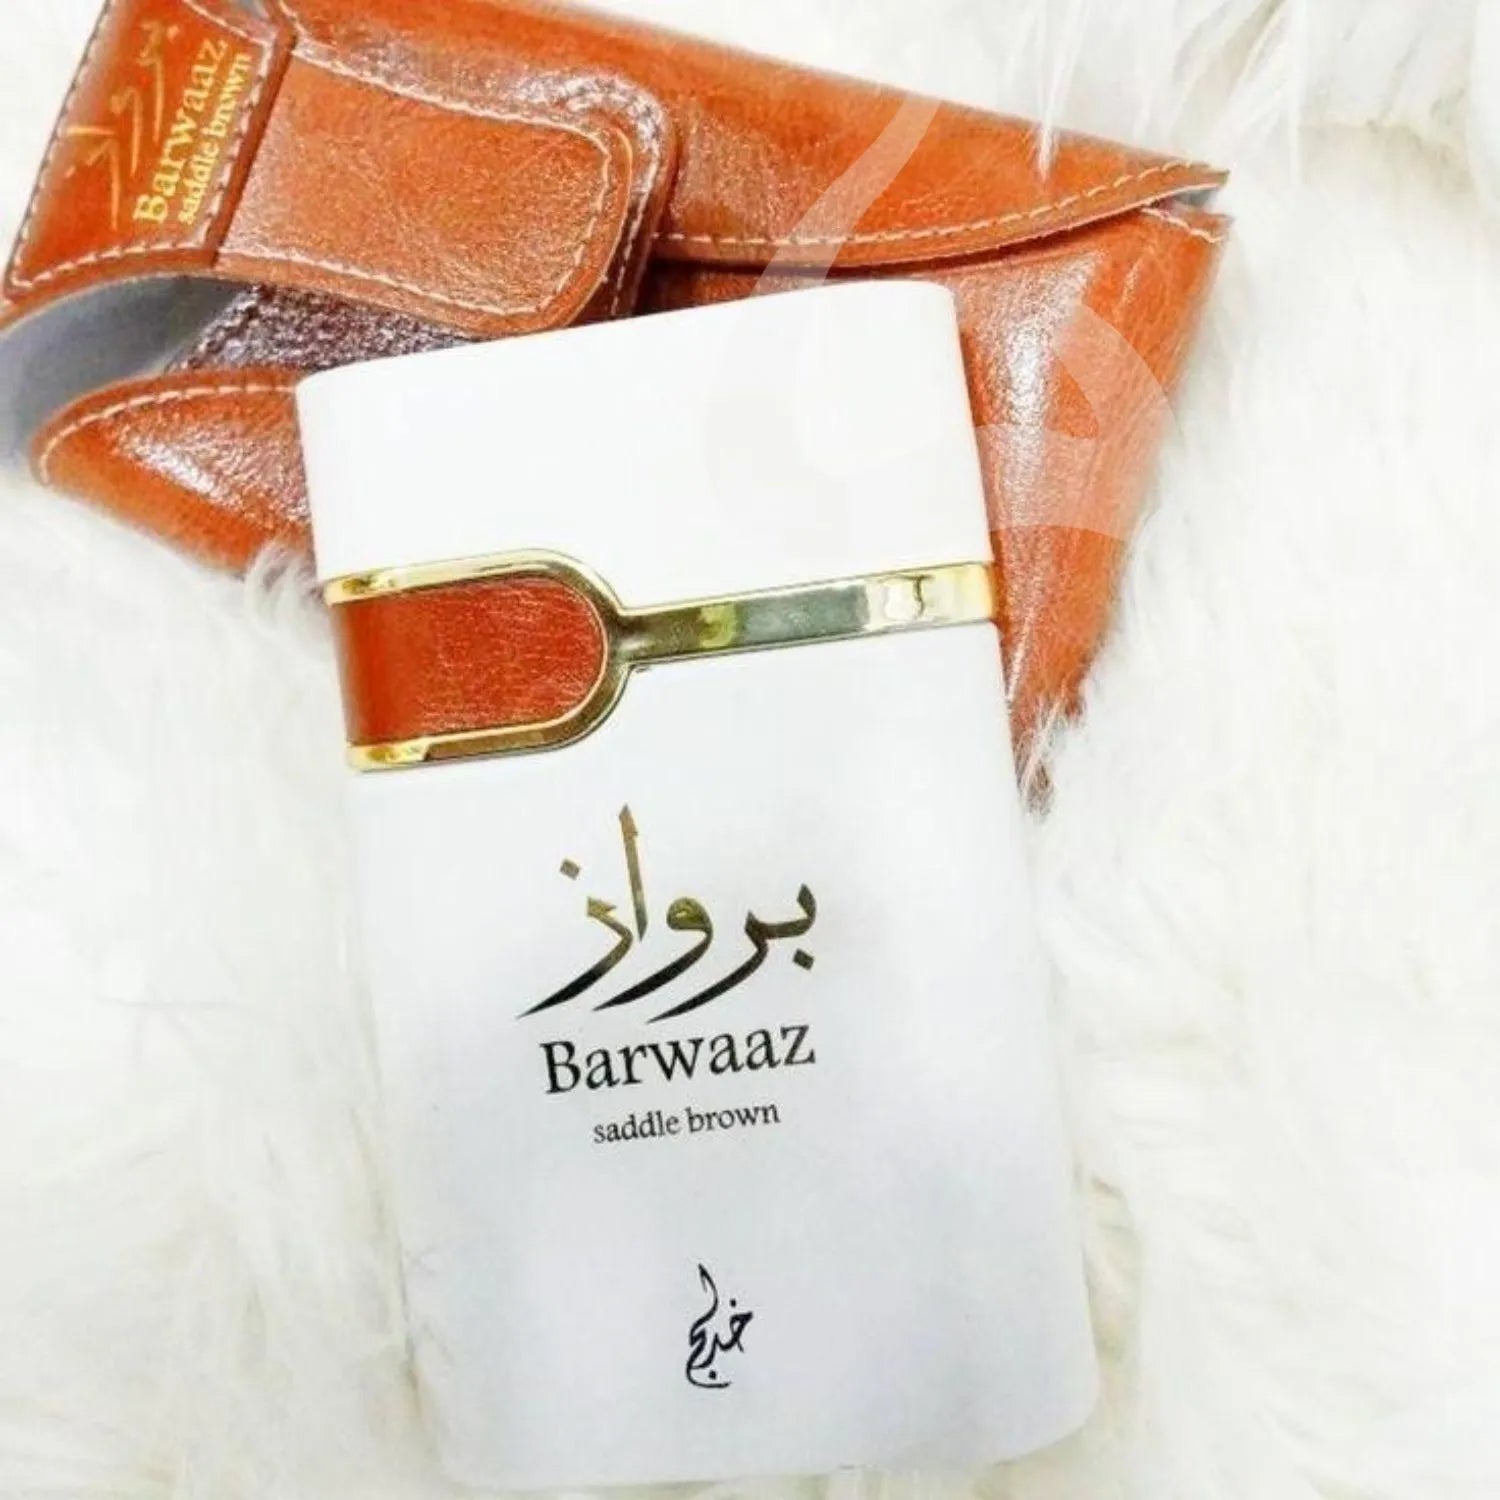 Barwaaz Saddle Brown Perfume Display